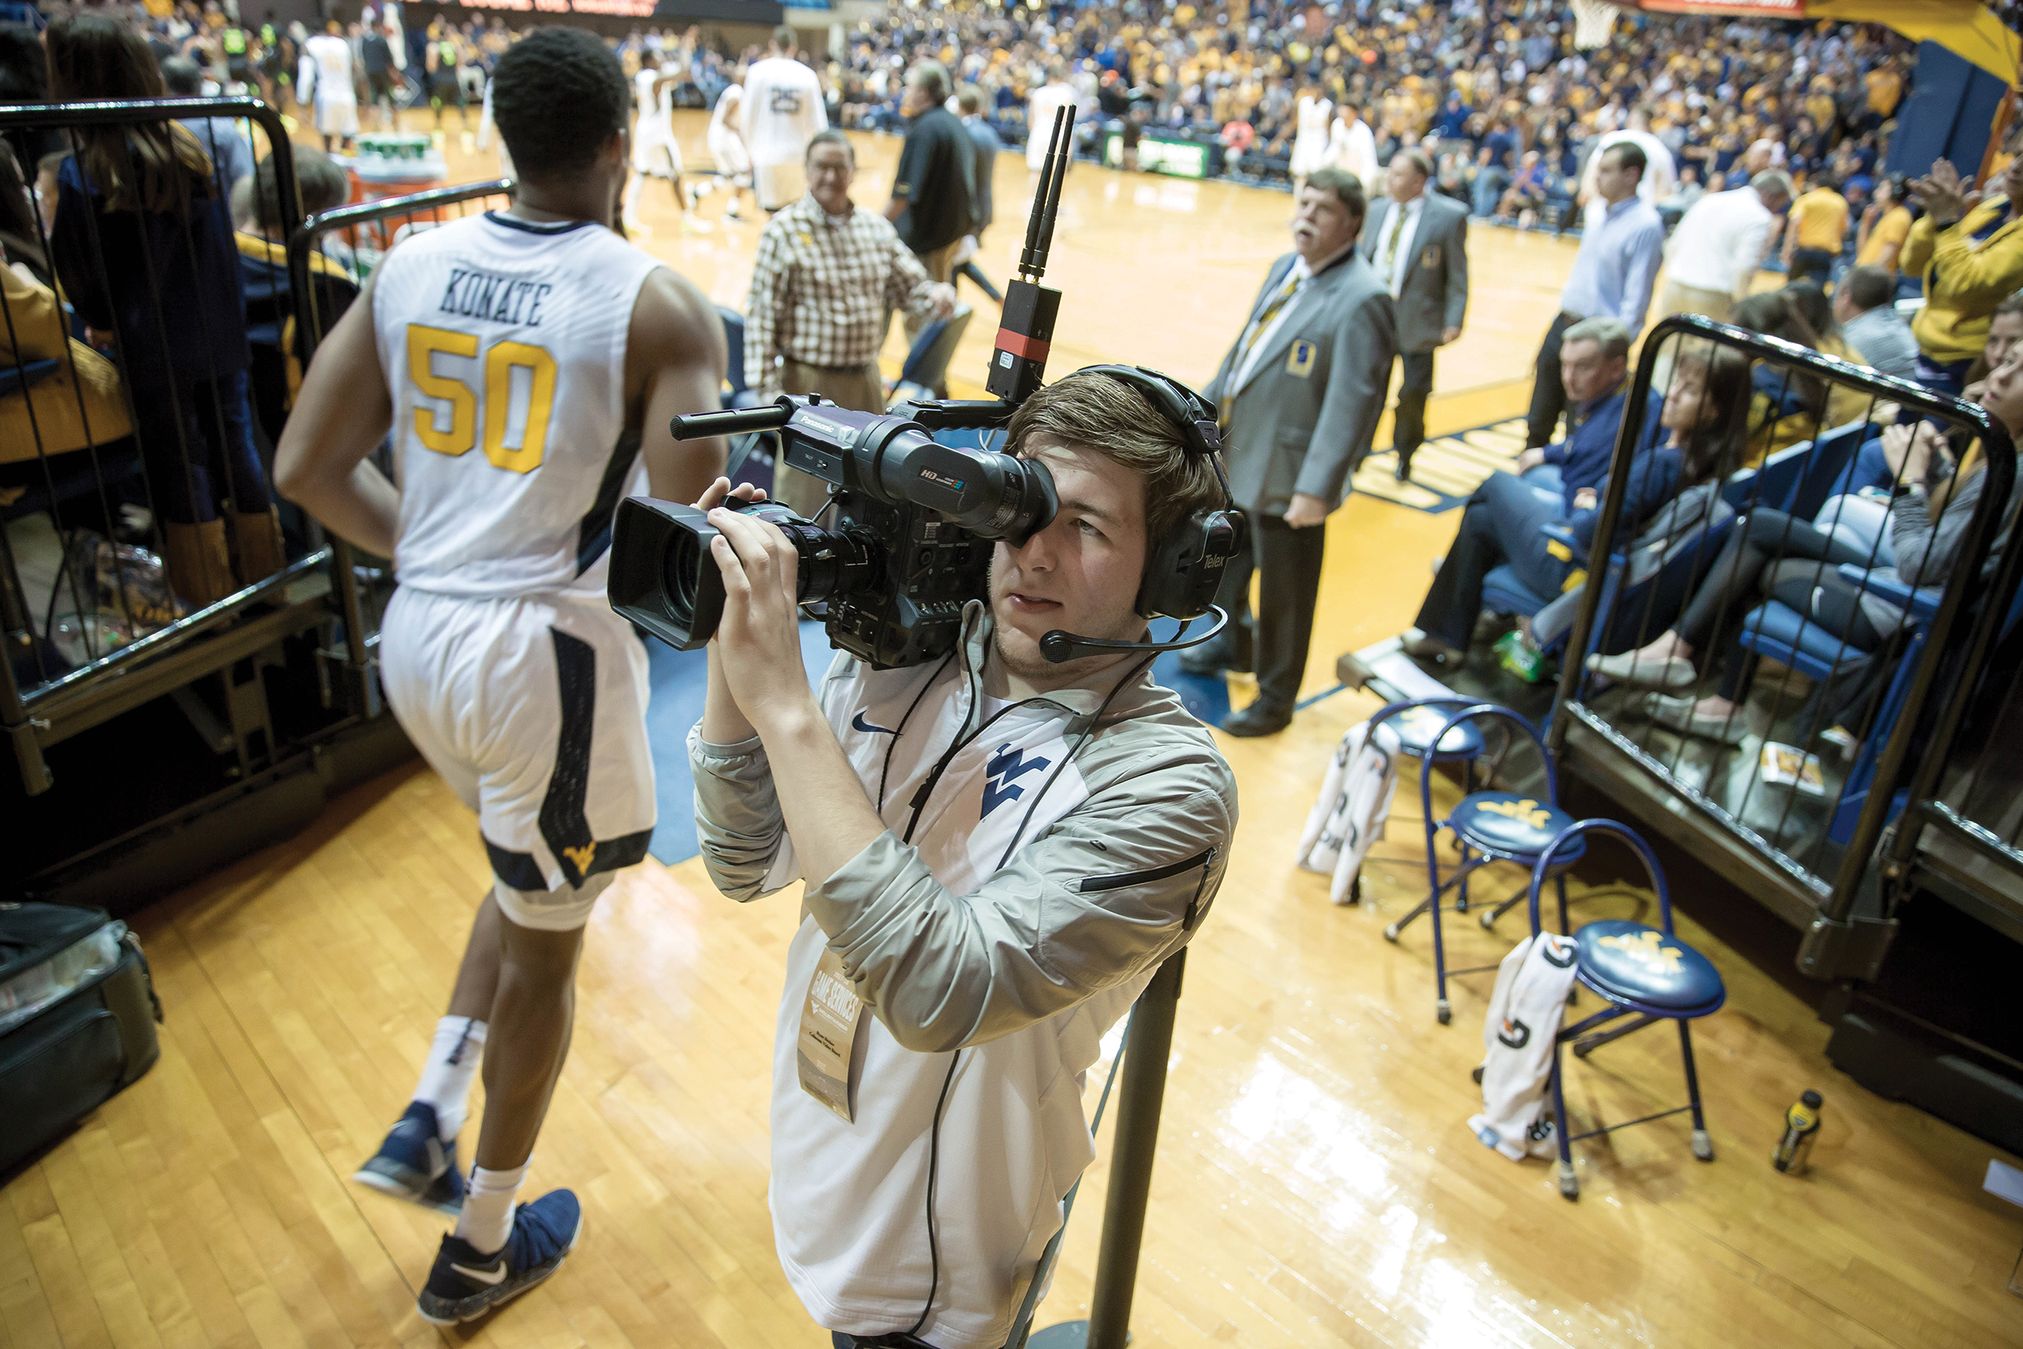 Student operating camera at WVU Coliseum